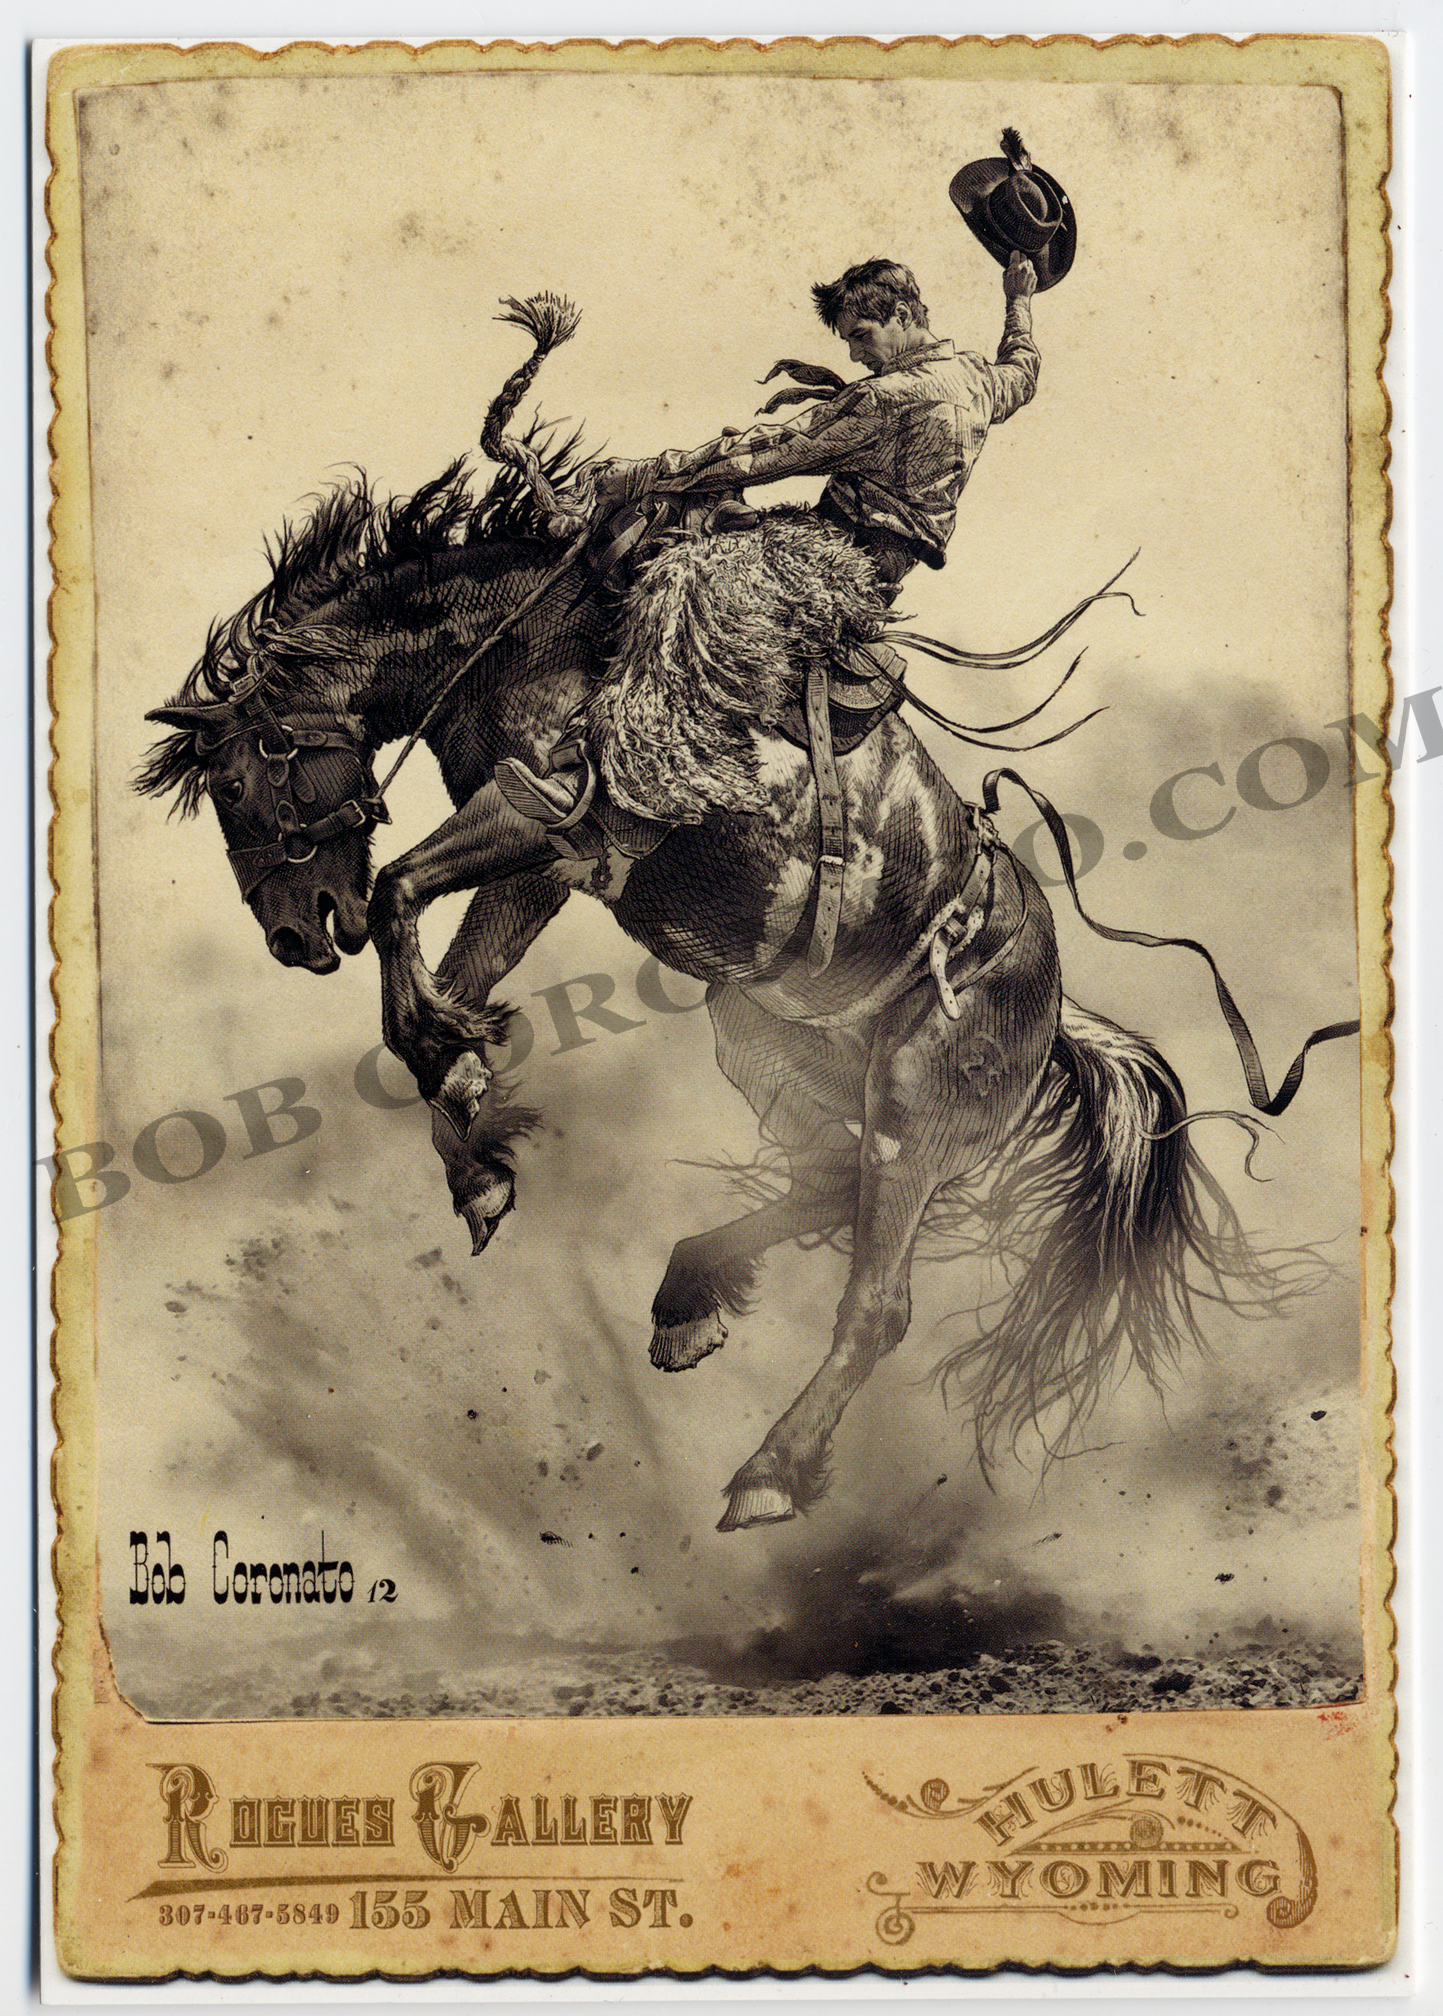 Cody Wyoming Buffalo Bill Stampede Rodeo Western Poster by Bob Coronato